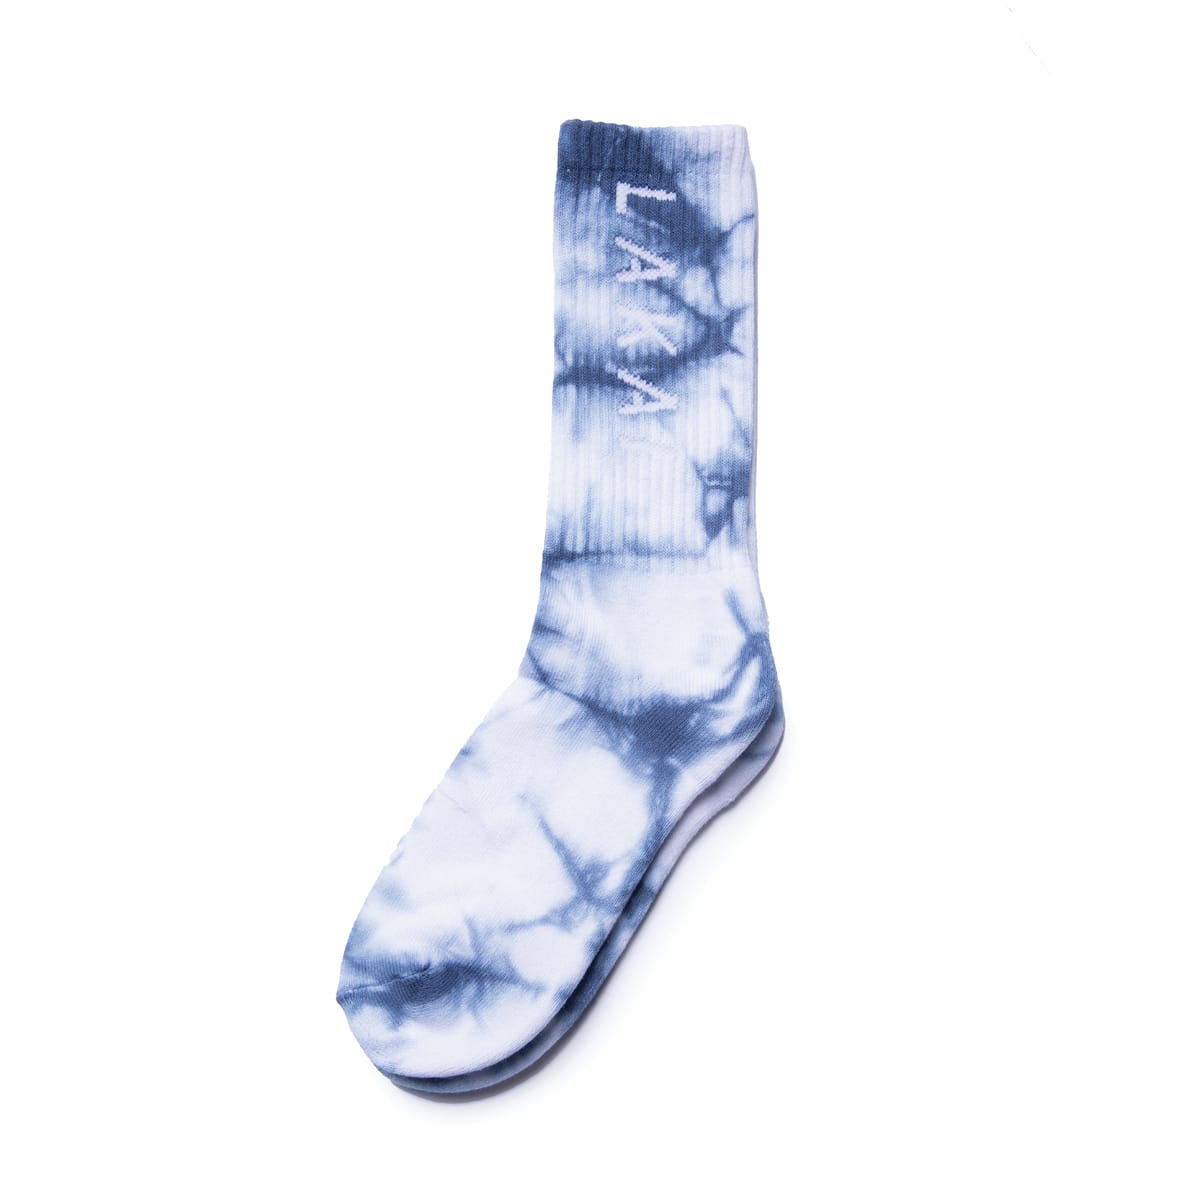 Cotton Lace Socks - Below The Kōwhai